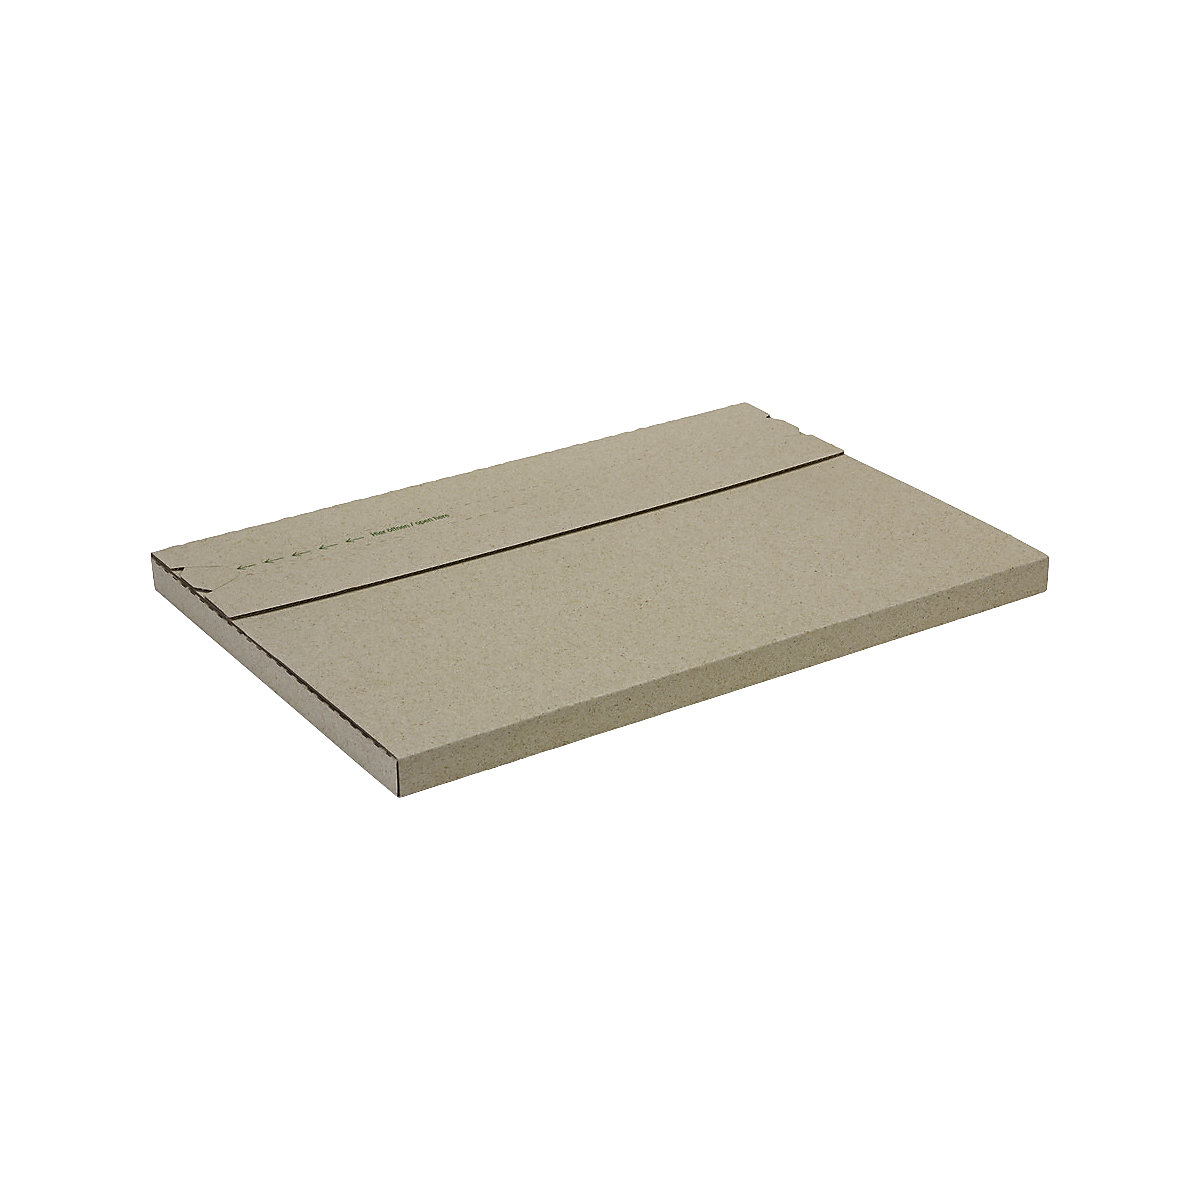 Graspapier-Flachpack terra, selbstklebend, Innen-LxBxH 349 x 246 x 15 mm, ab 100 Stk-1